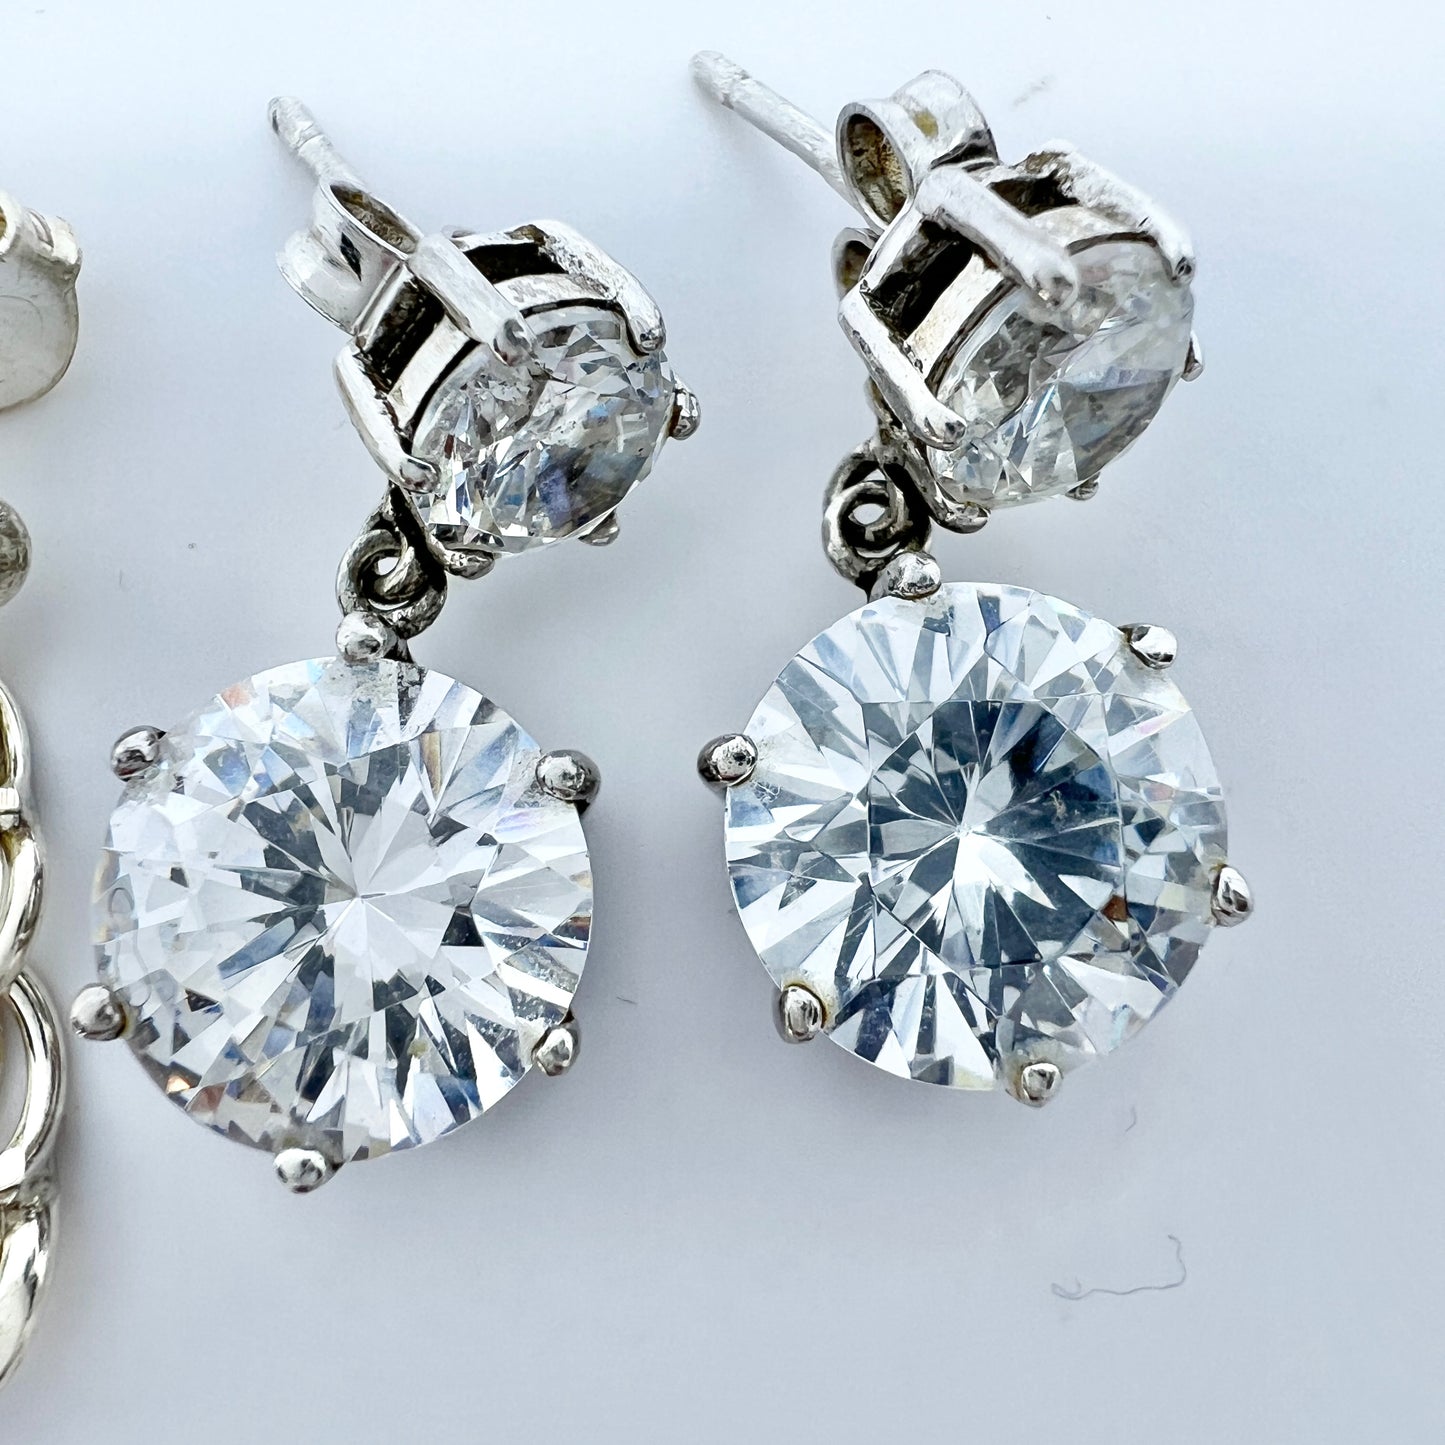 Two Pair of Sterling Silver Earrings. Bismark + CZ.